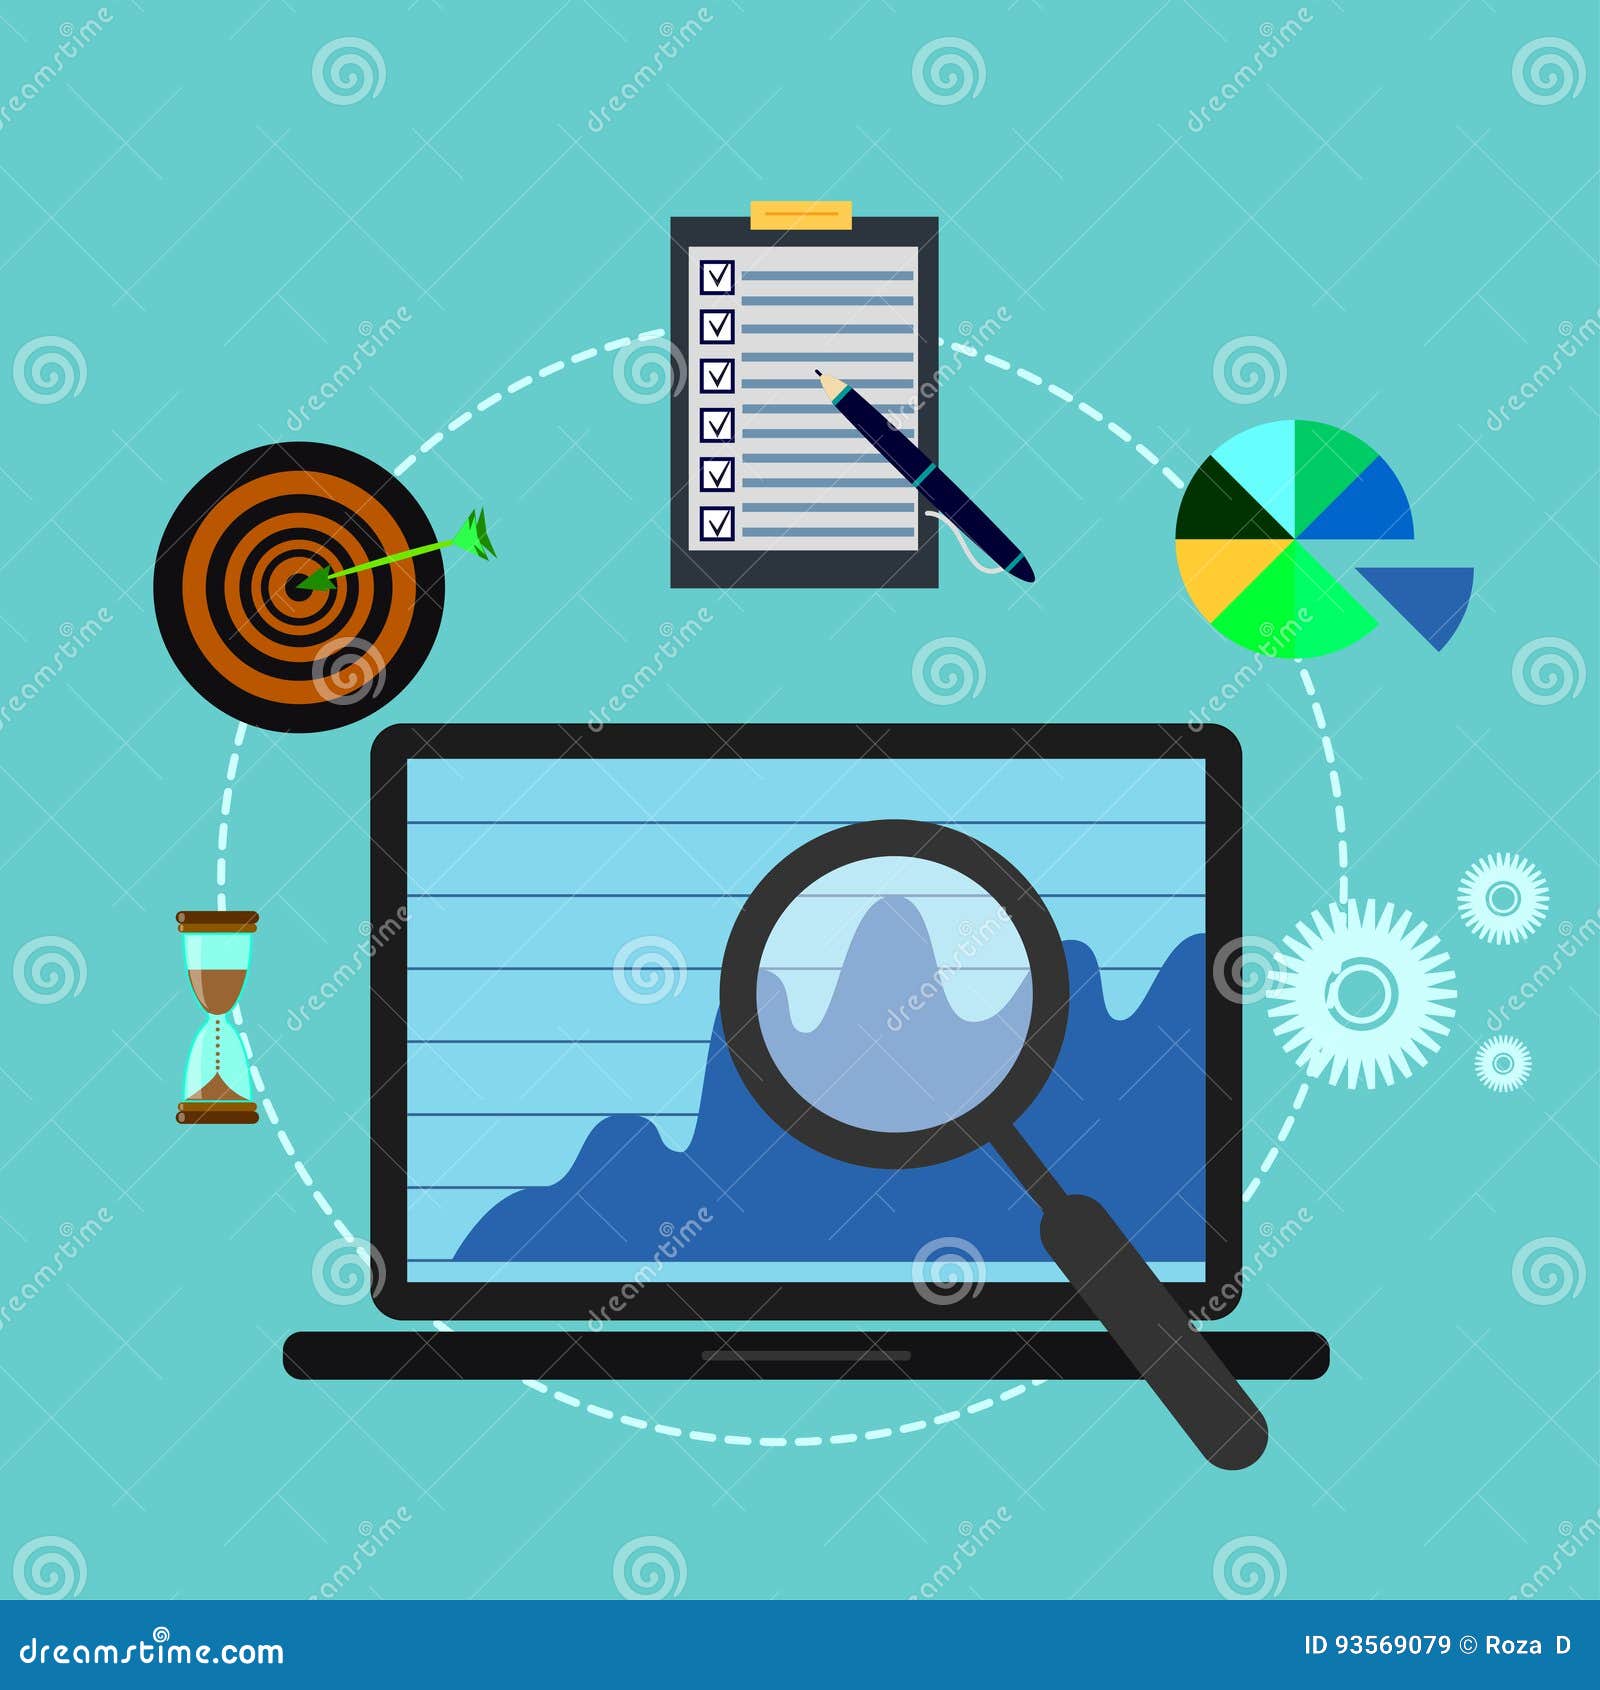 business analysis, laptop, magnifier, target, hourglass